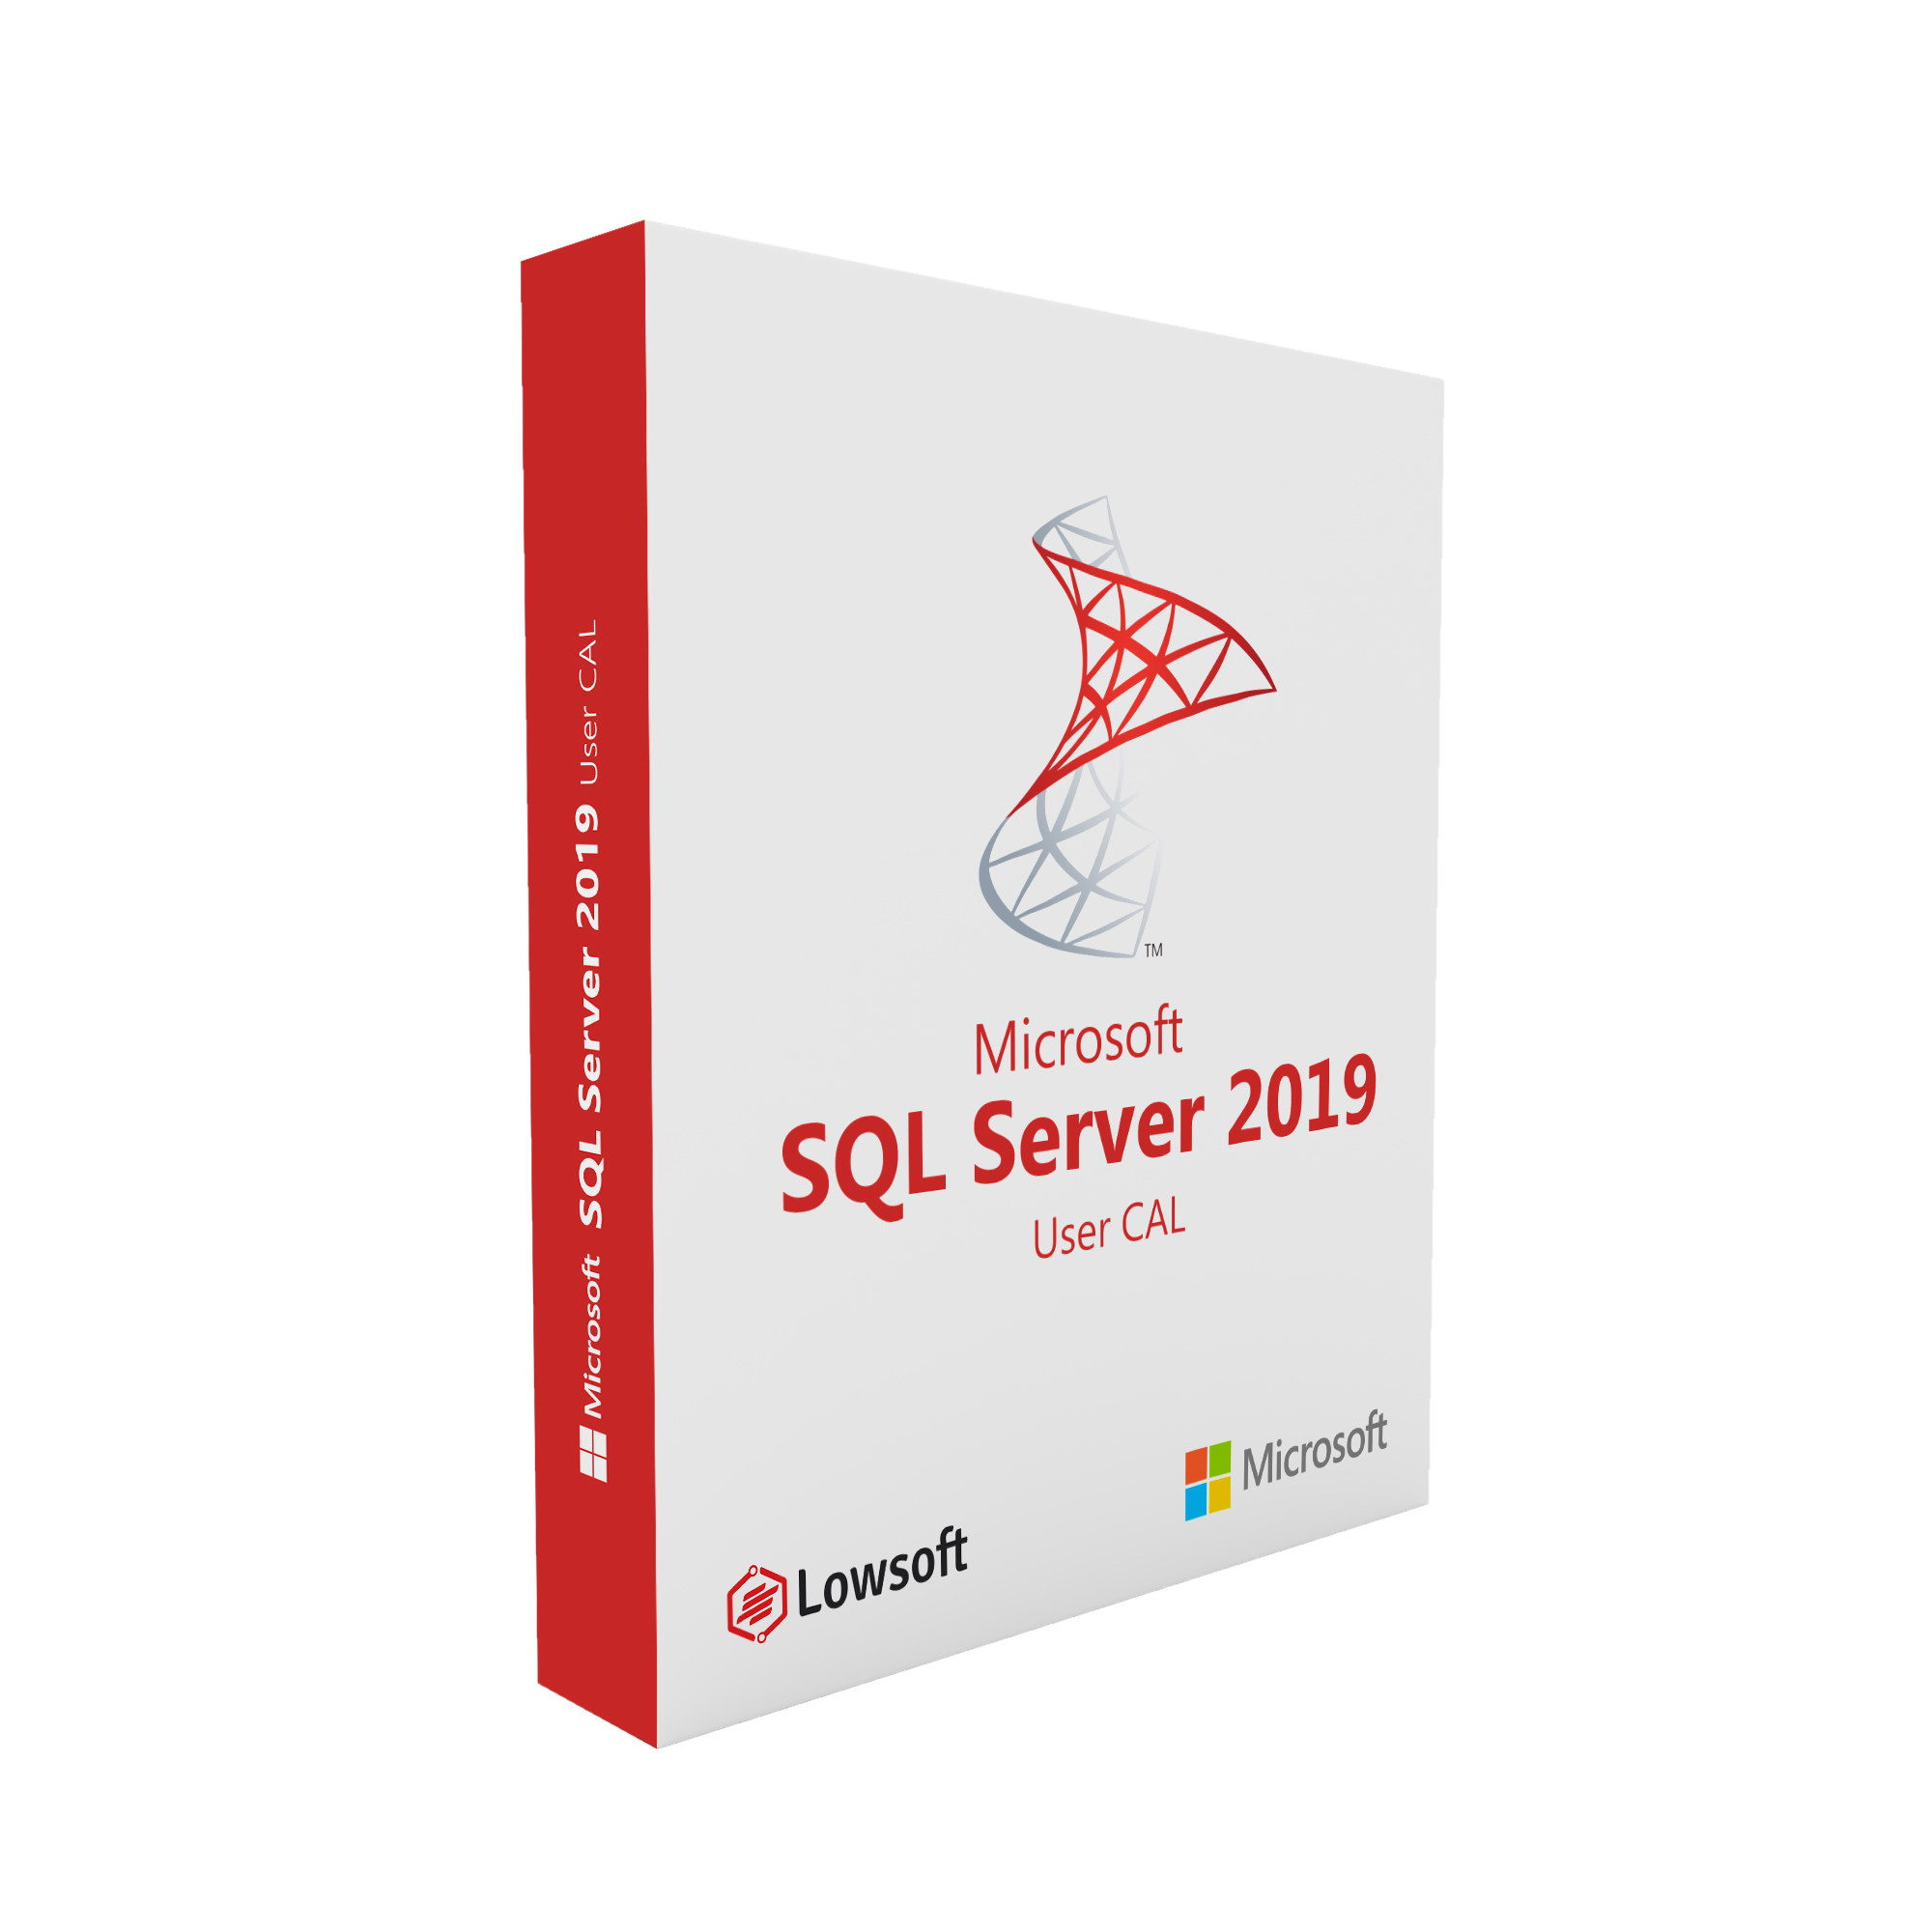 SQL Server 2019 User CAL